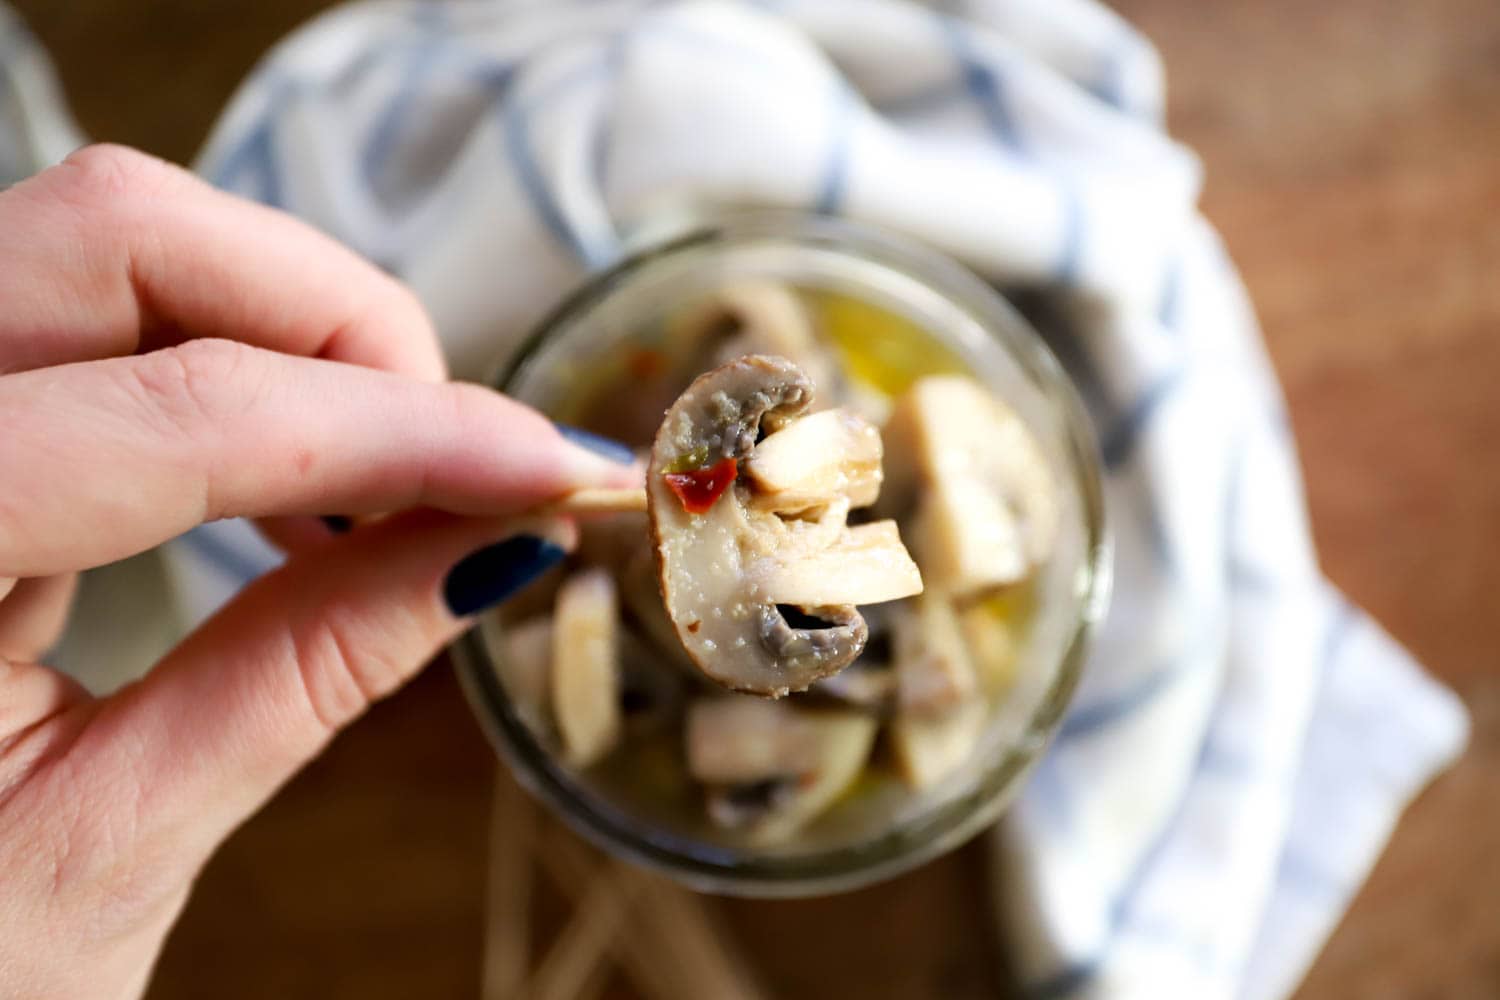 hand holding a marinated mushroom on a toothpick over open jar of mushrooms.